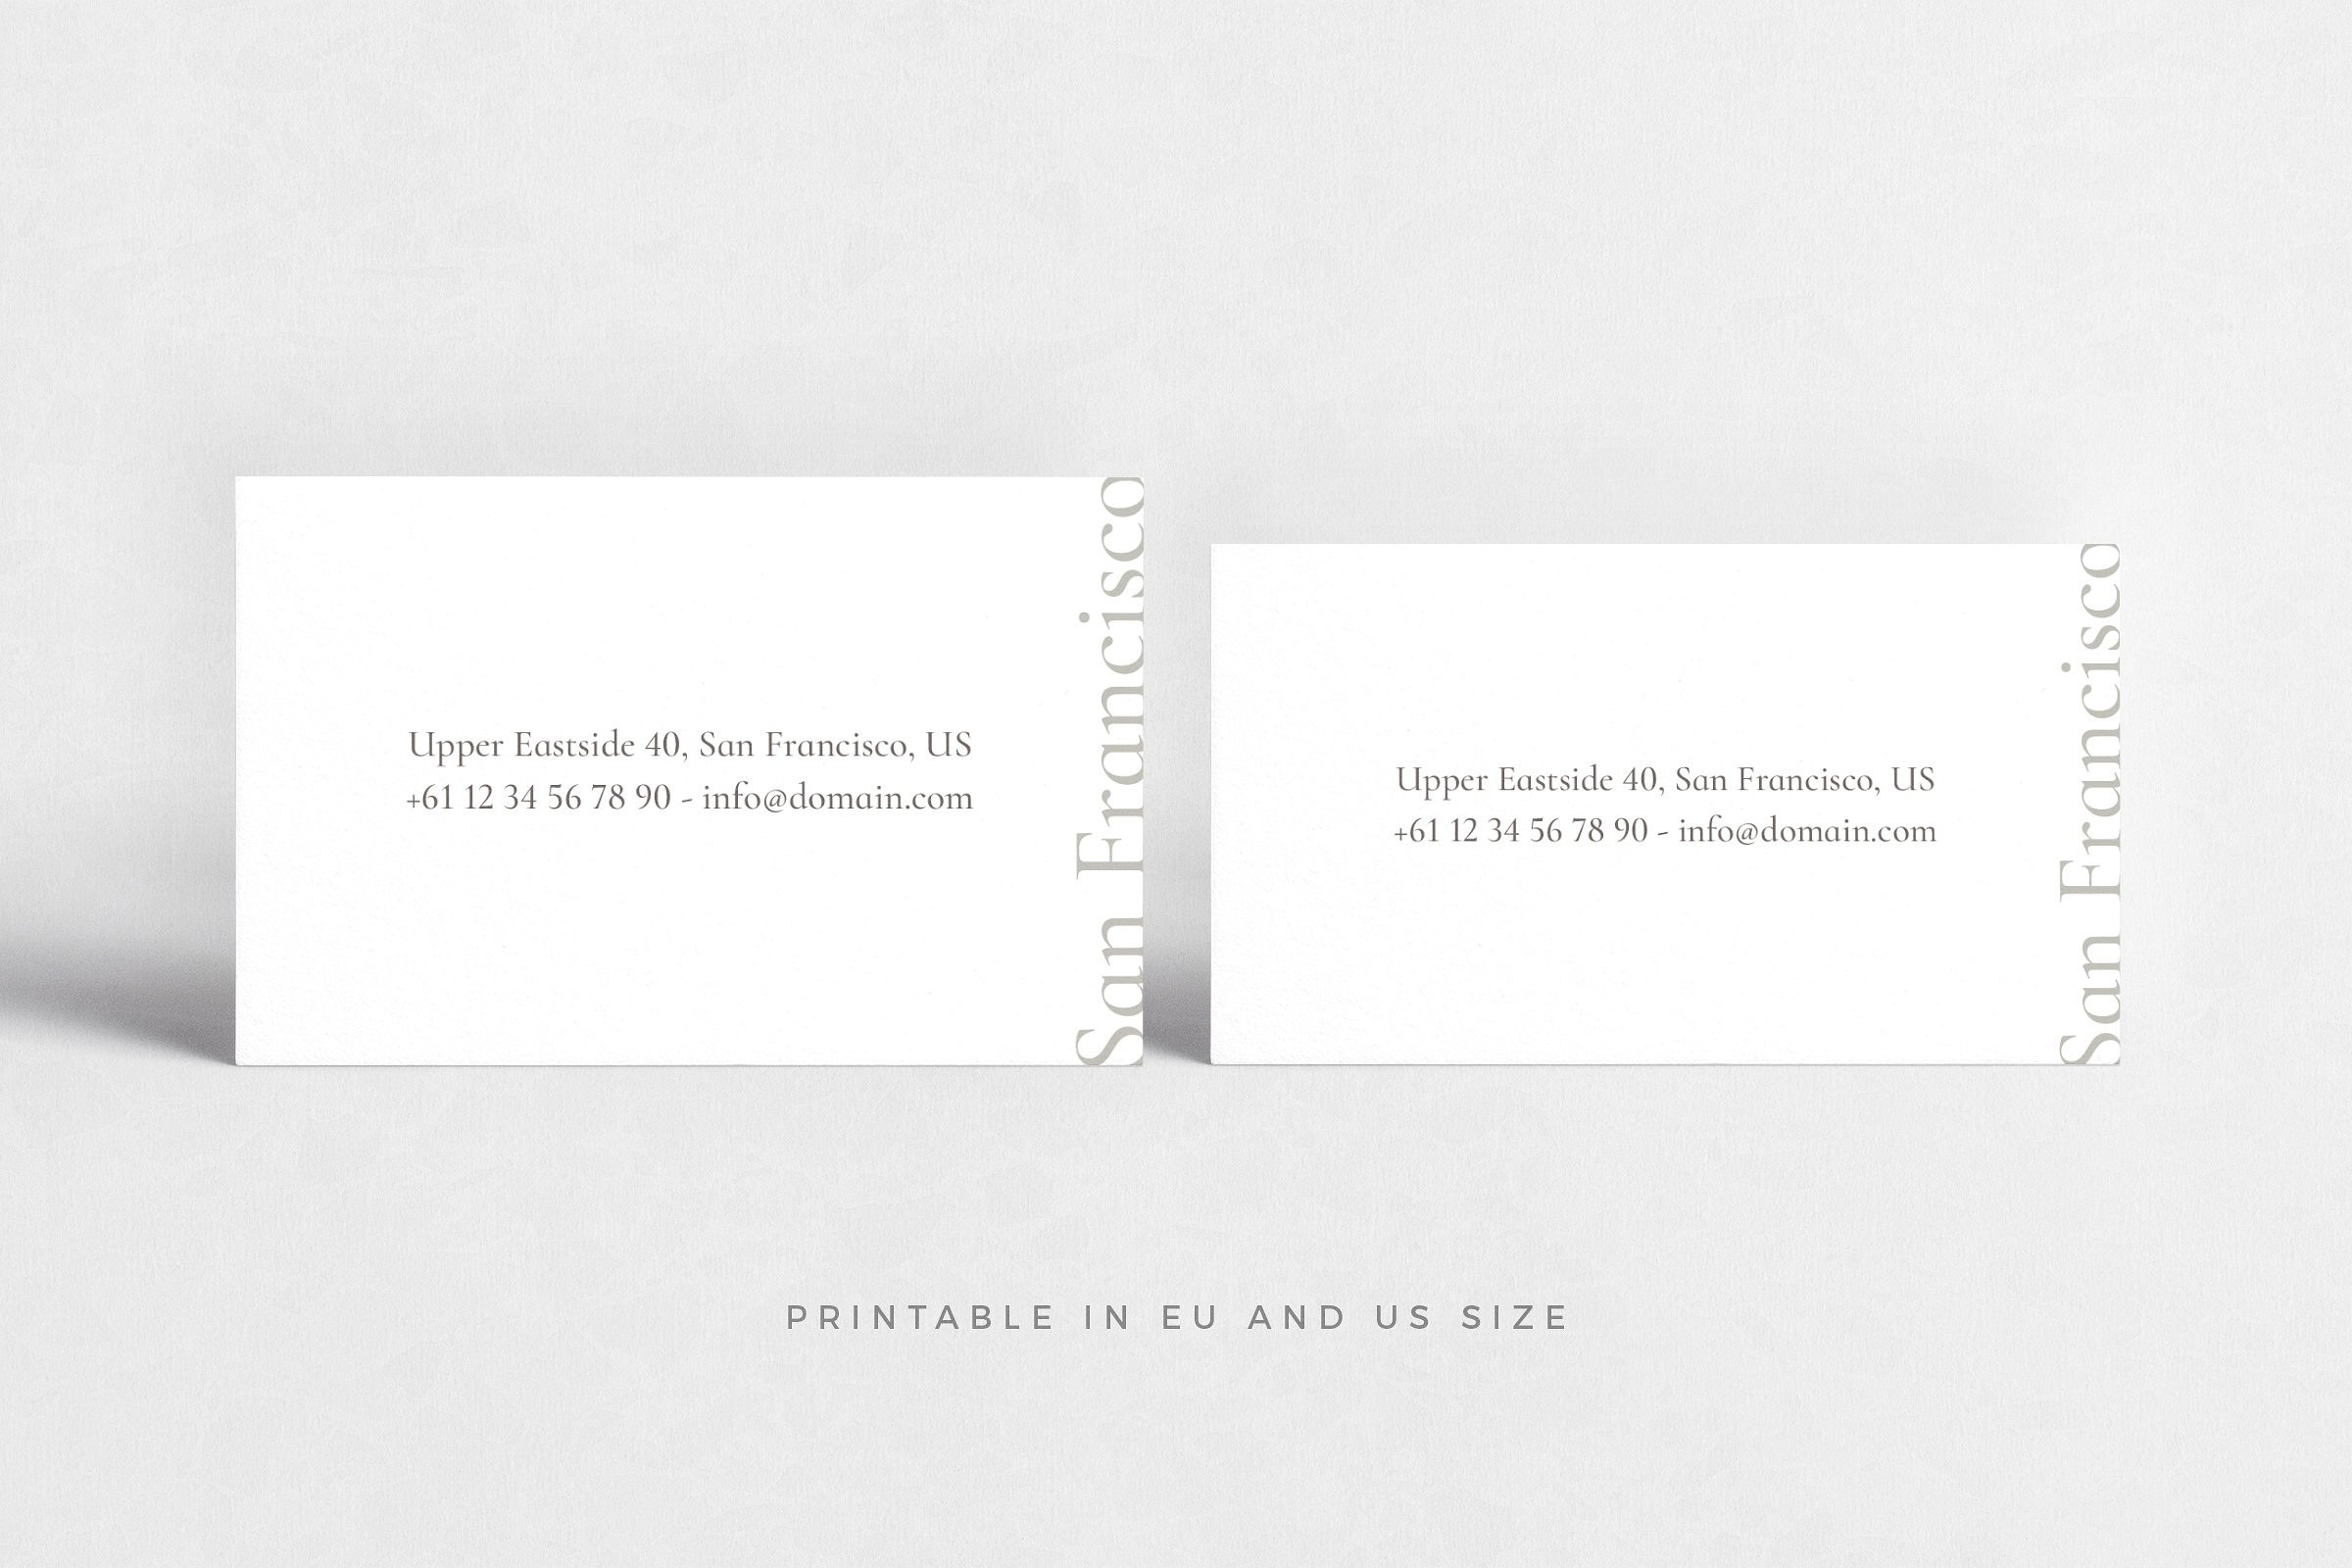 极简主义企业名片设计模板2 San Francisco Business Cards插图2